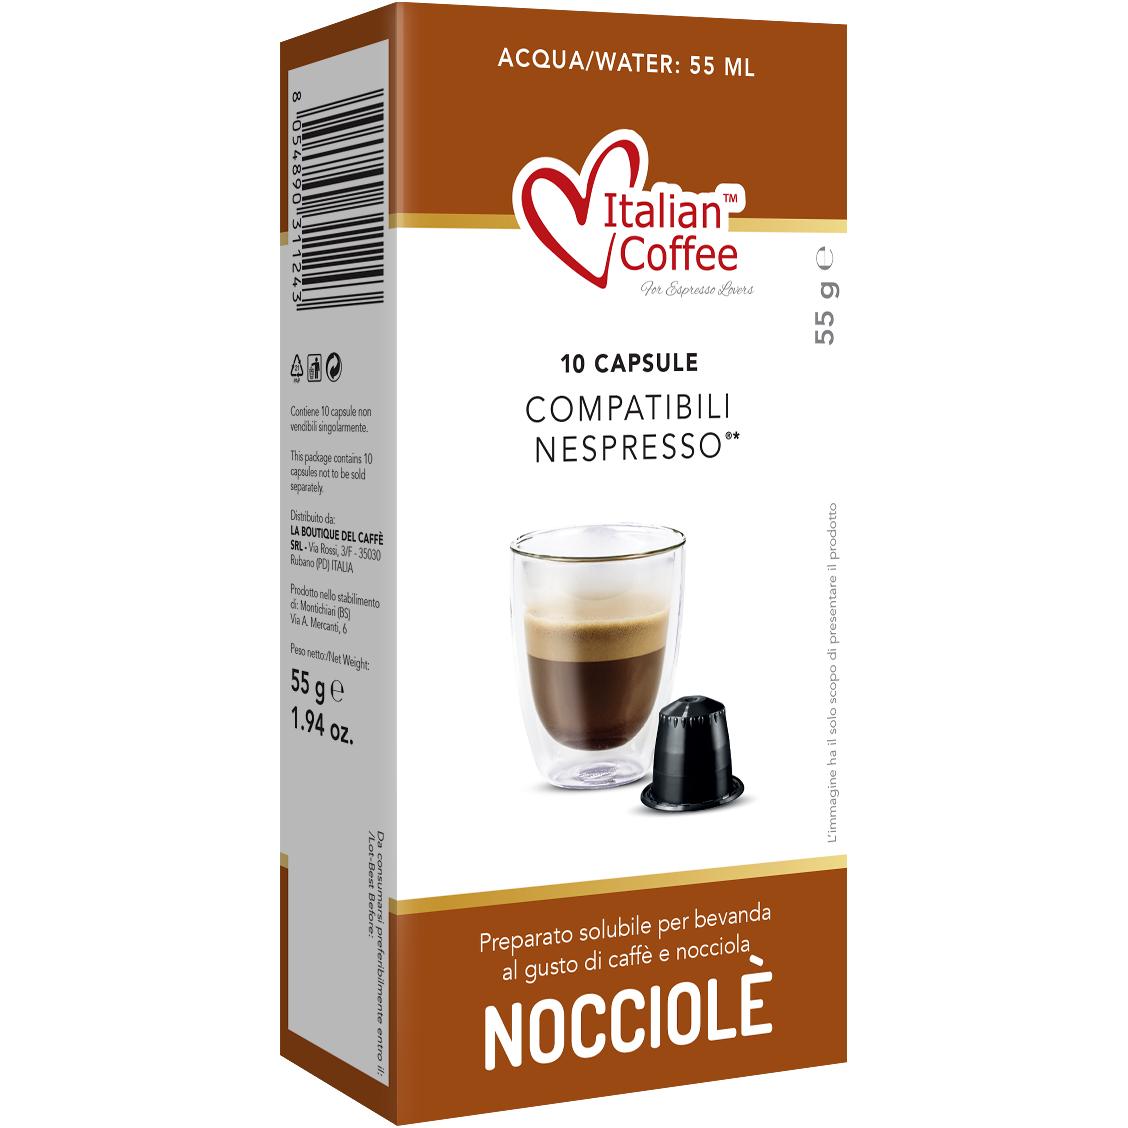 Nespresso Pro Compatibles 50 Capsulas Planas Cremoso